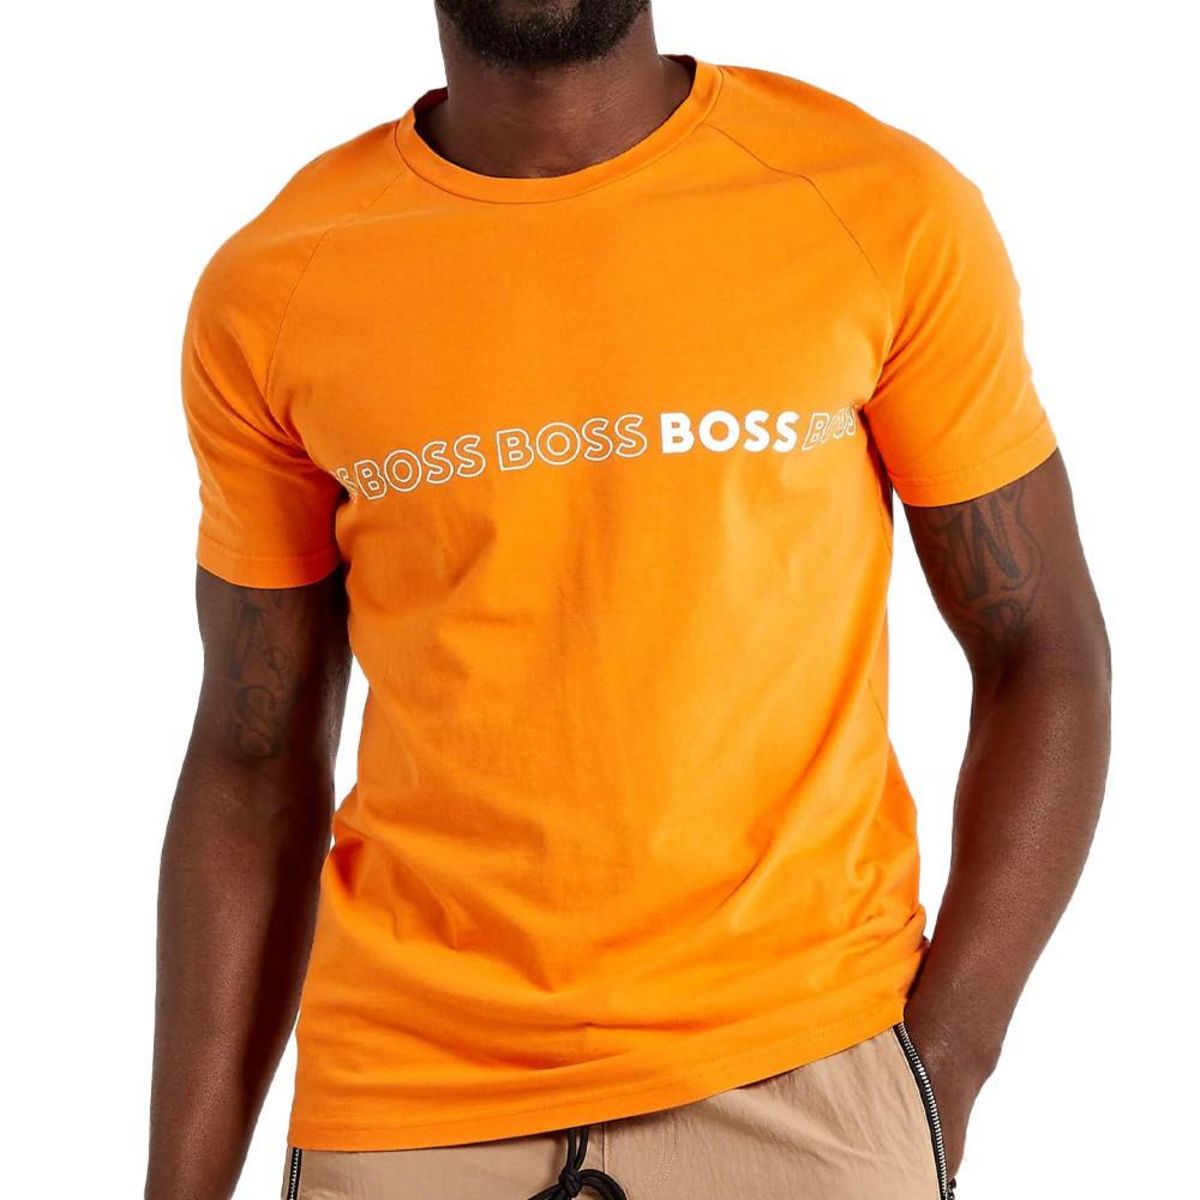 klauw landelijk zak T-shirt Orange Homme Hugo Boss RN pas cher - Auchan.fr